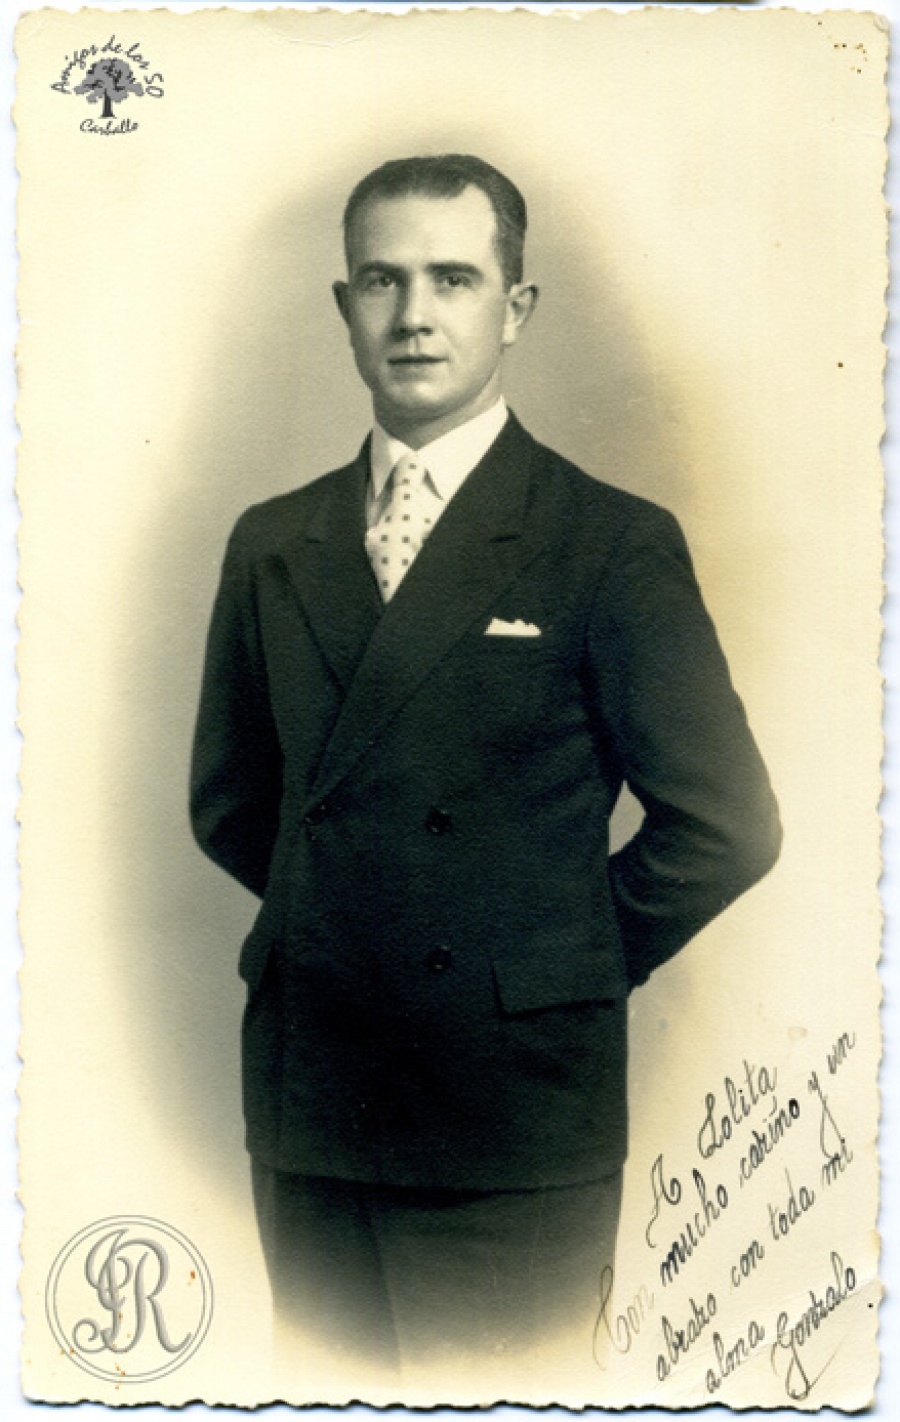 1940 - Gonzalo Pena